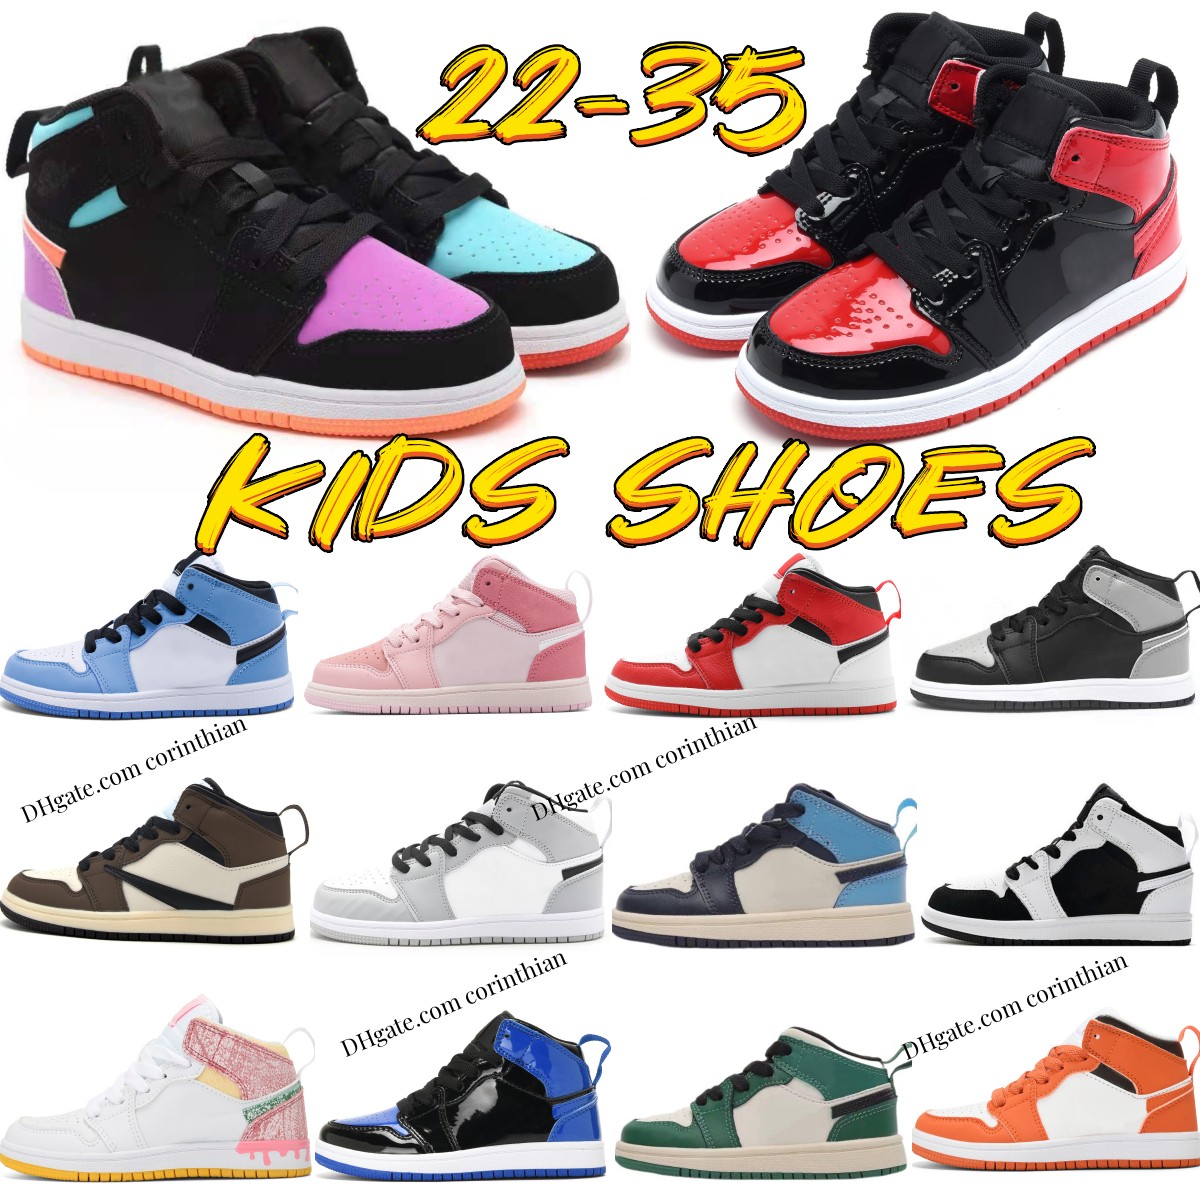 

Kids shoes 1 basketball sneakers 1s high toddlers boys running shoe Girls Children Sport trainers kid youth infants Outdoor Sneaker Somke Grey Panda Black eur 22-35